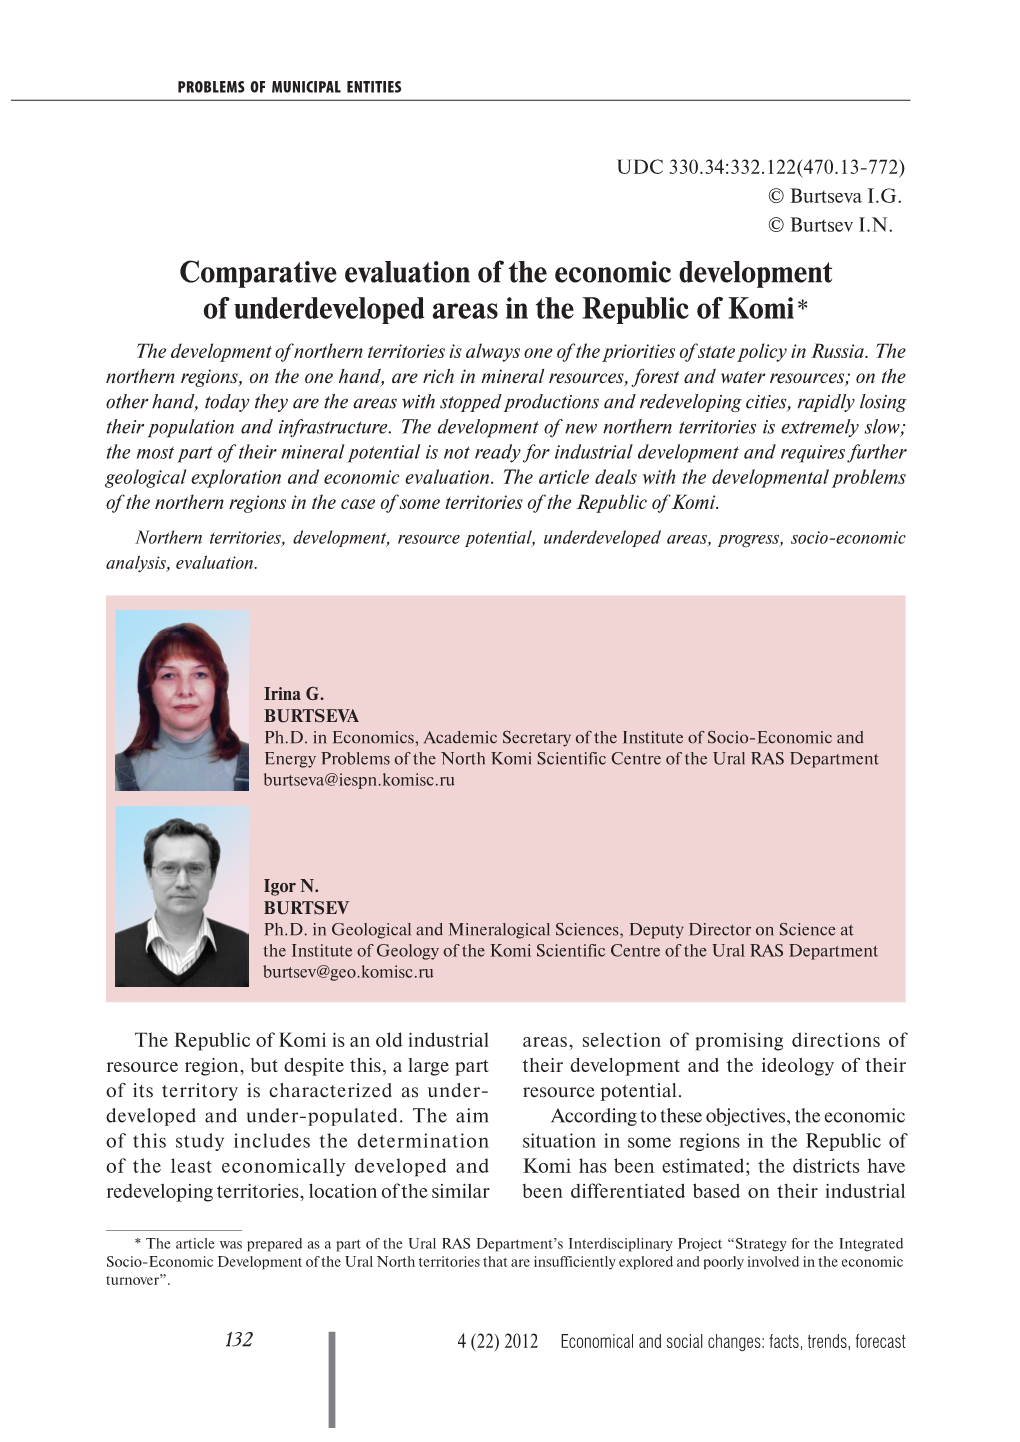 Comparative Evaluation of the Economic Development Of